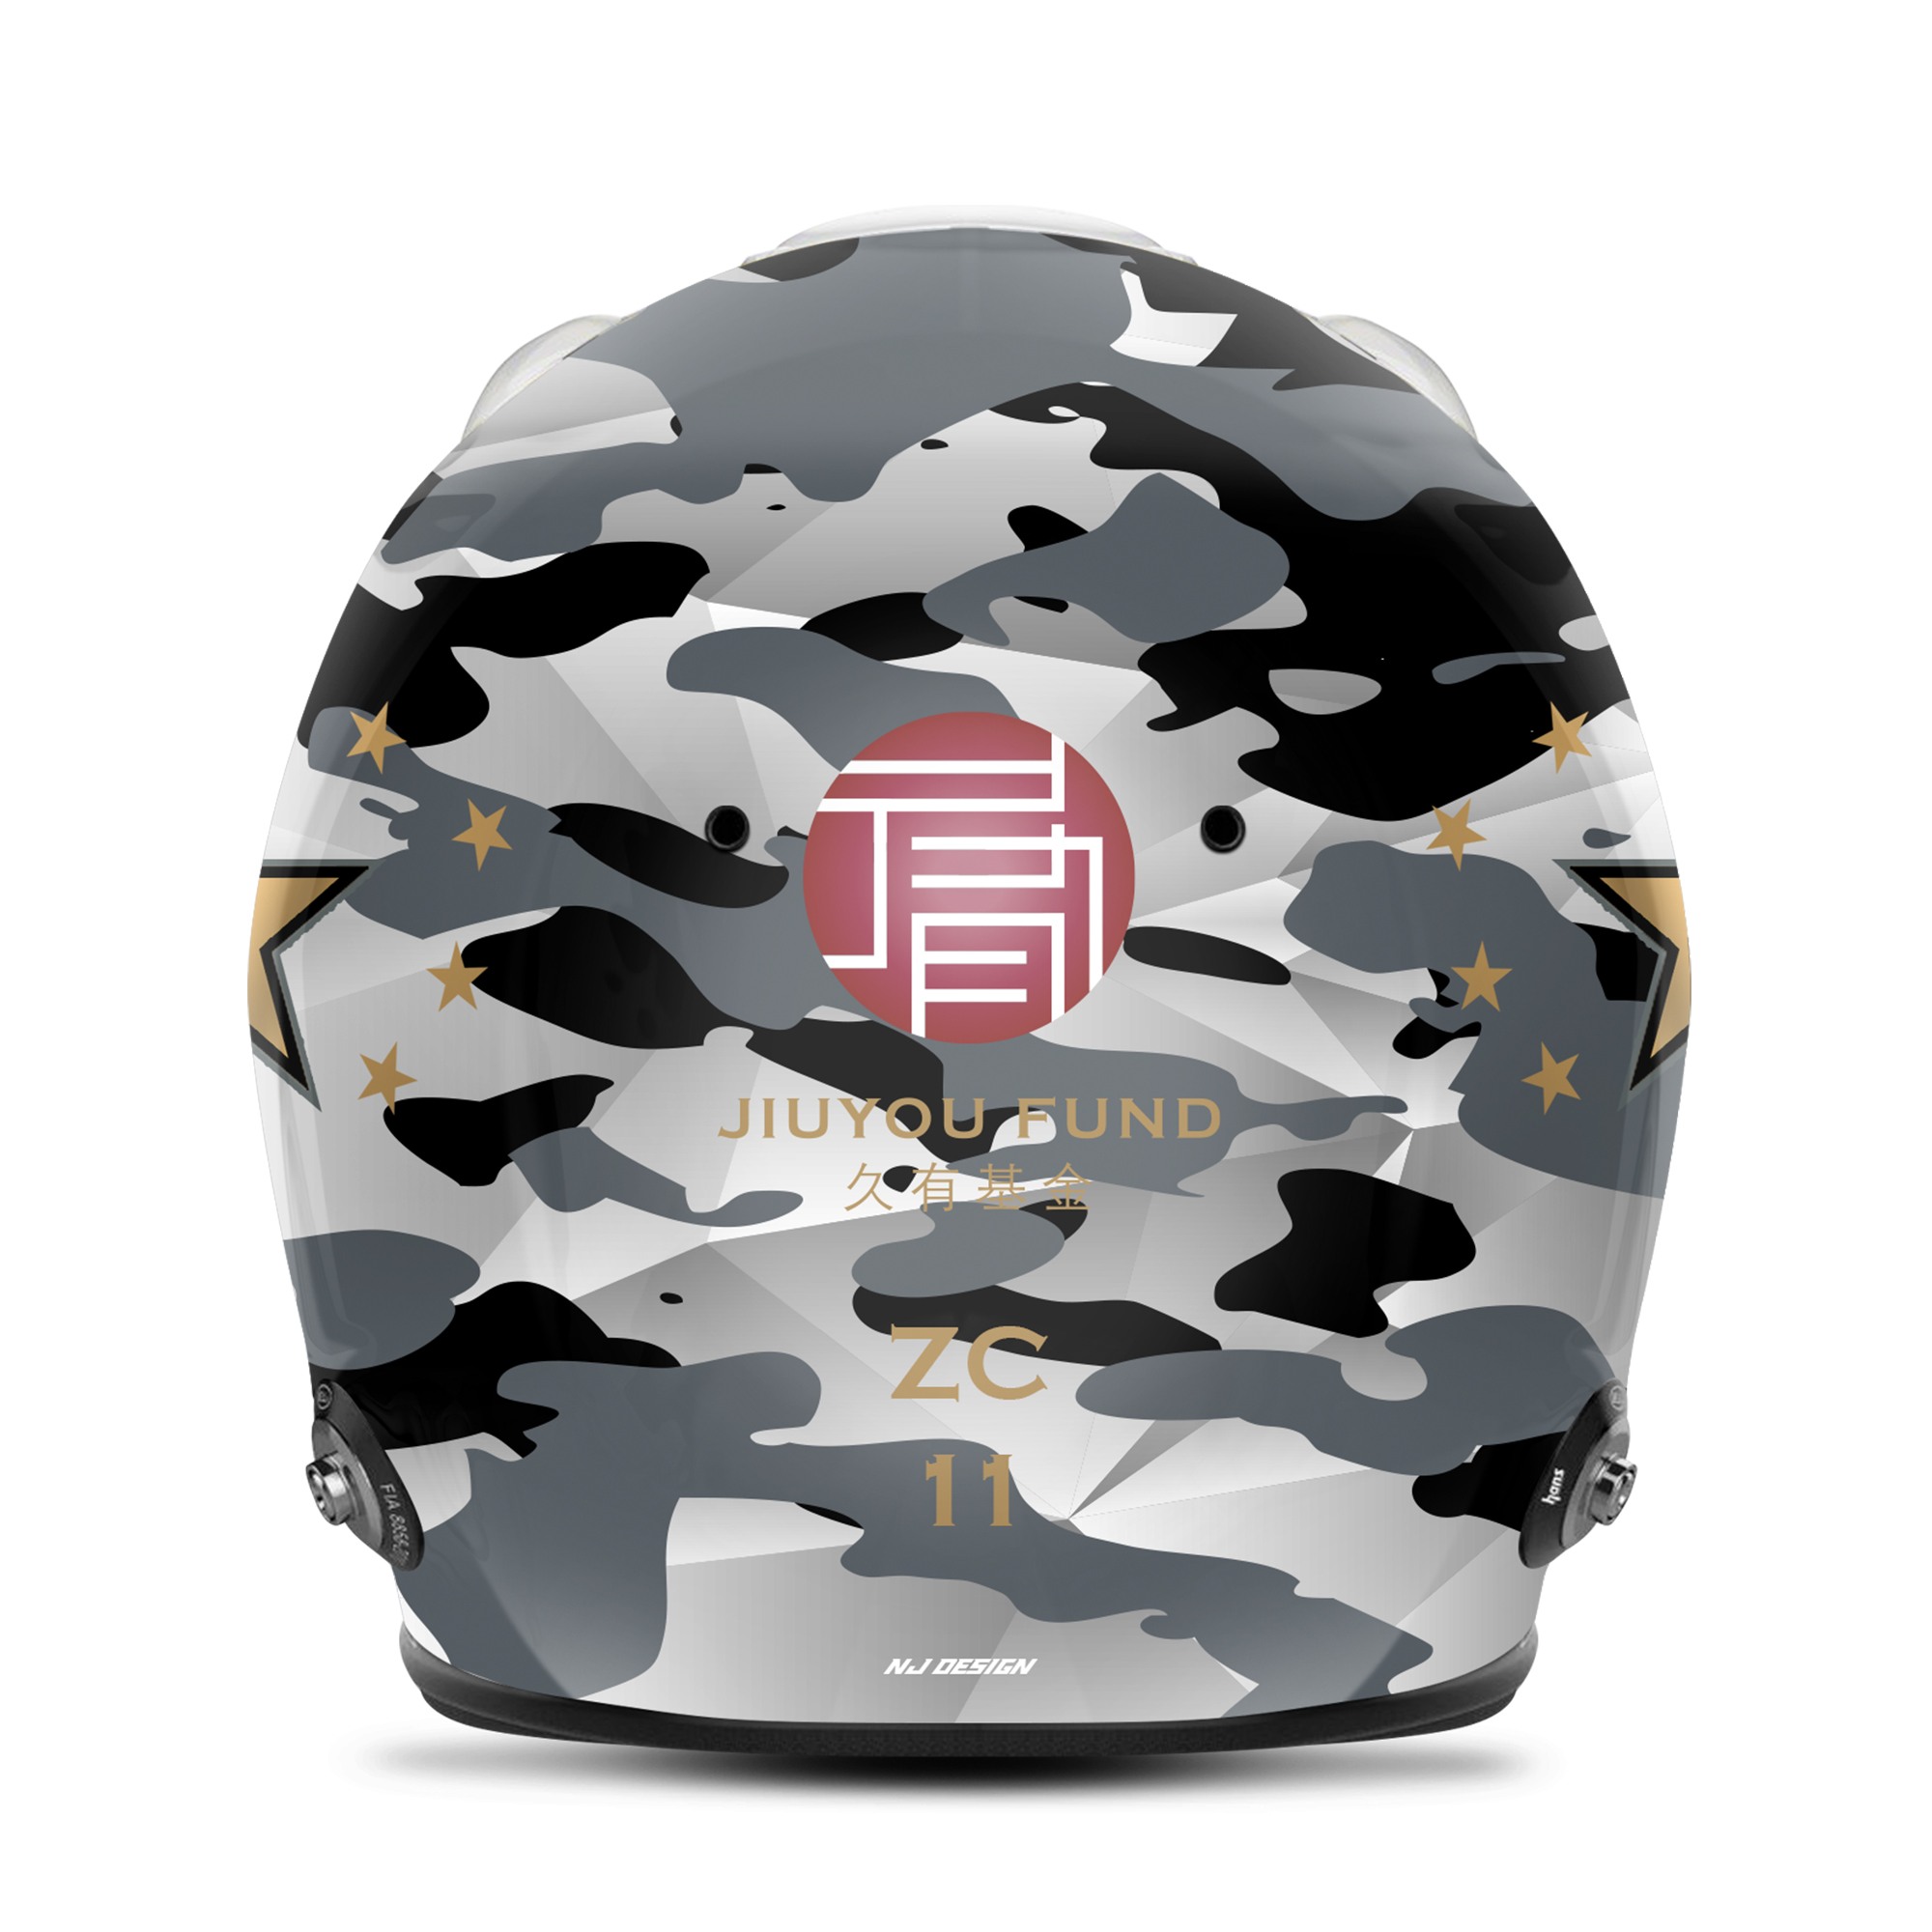 Camouflage helmet design